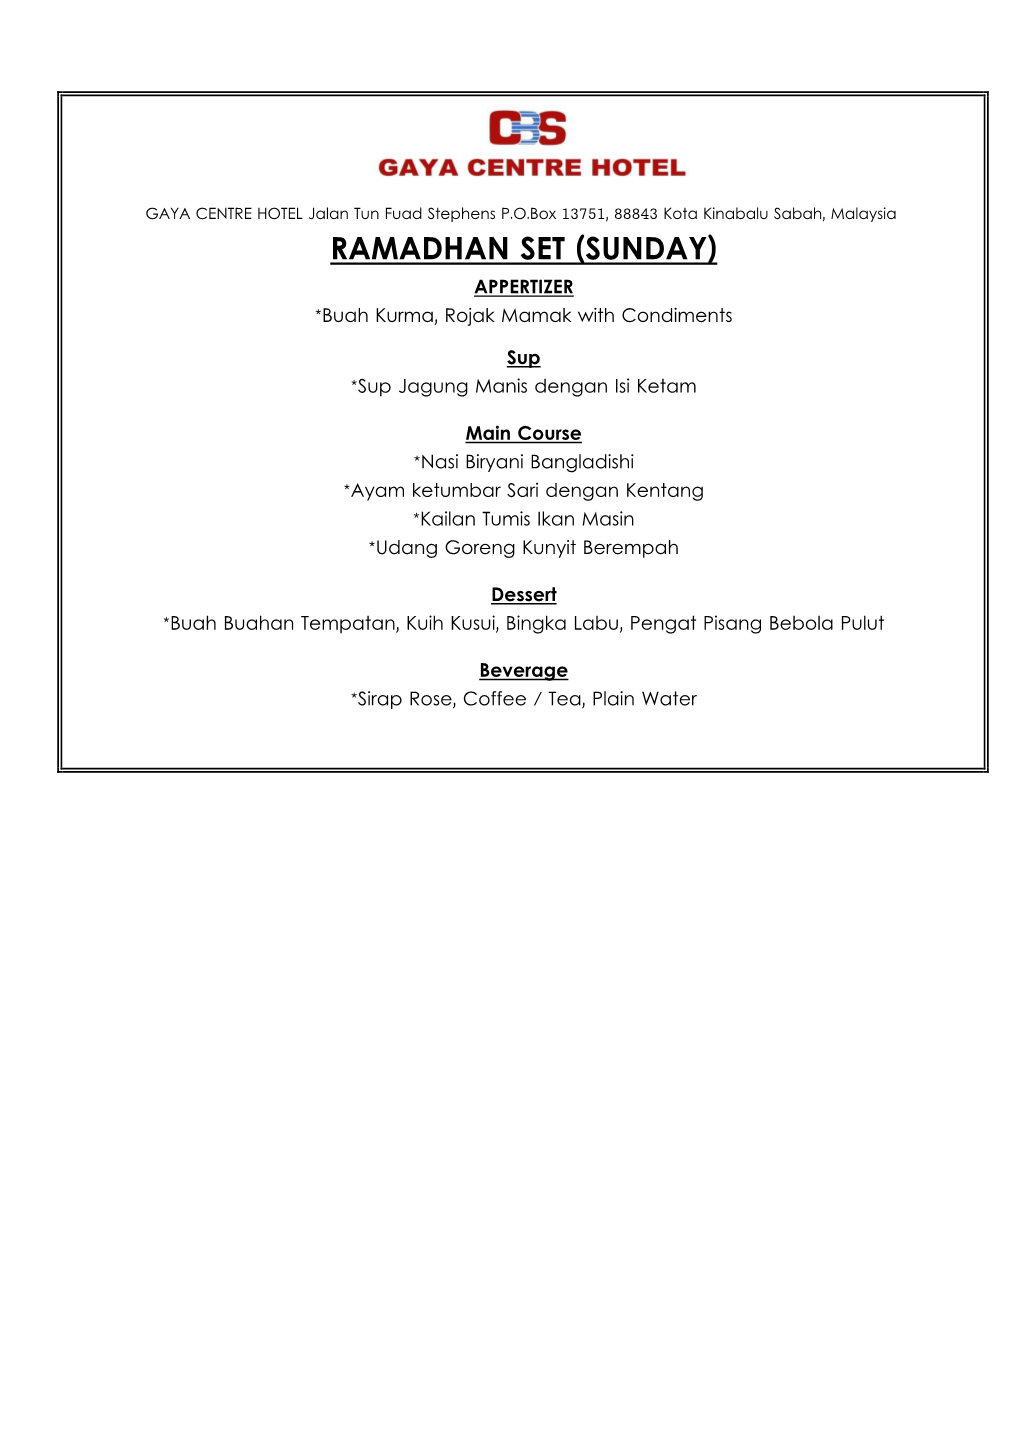 RAMADHAN SET (SUNDAY) APPERTIZER *Buah Kurma, Rojak Mamak with Condiments